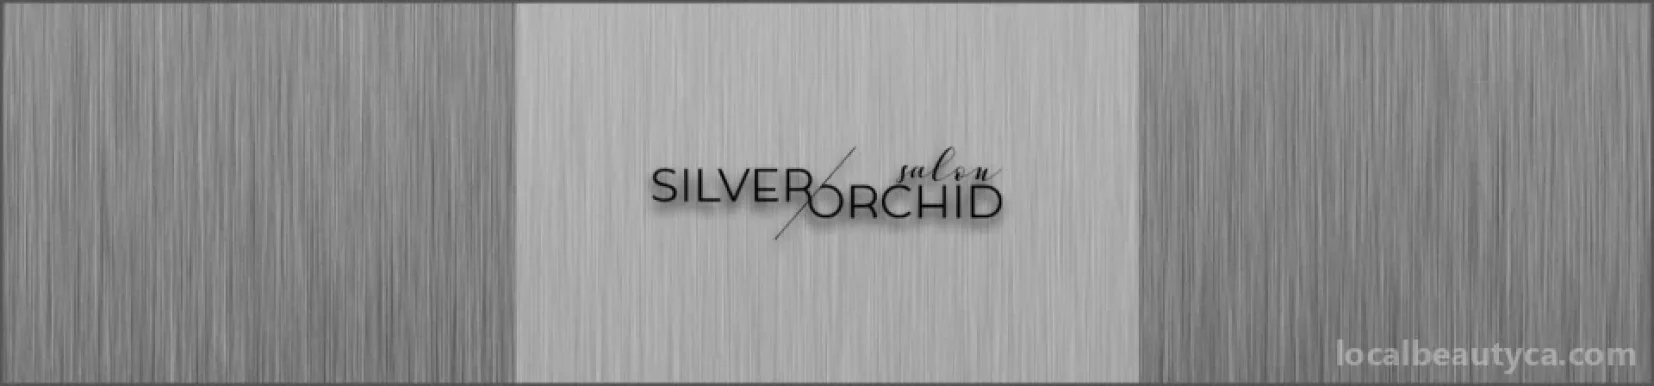 Silver Orchid Salon, Calgary - Photo 2